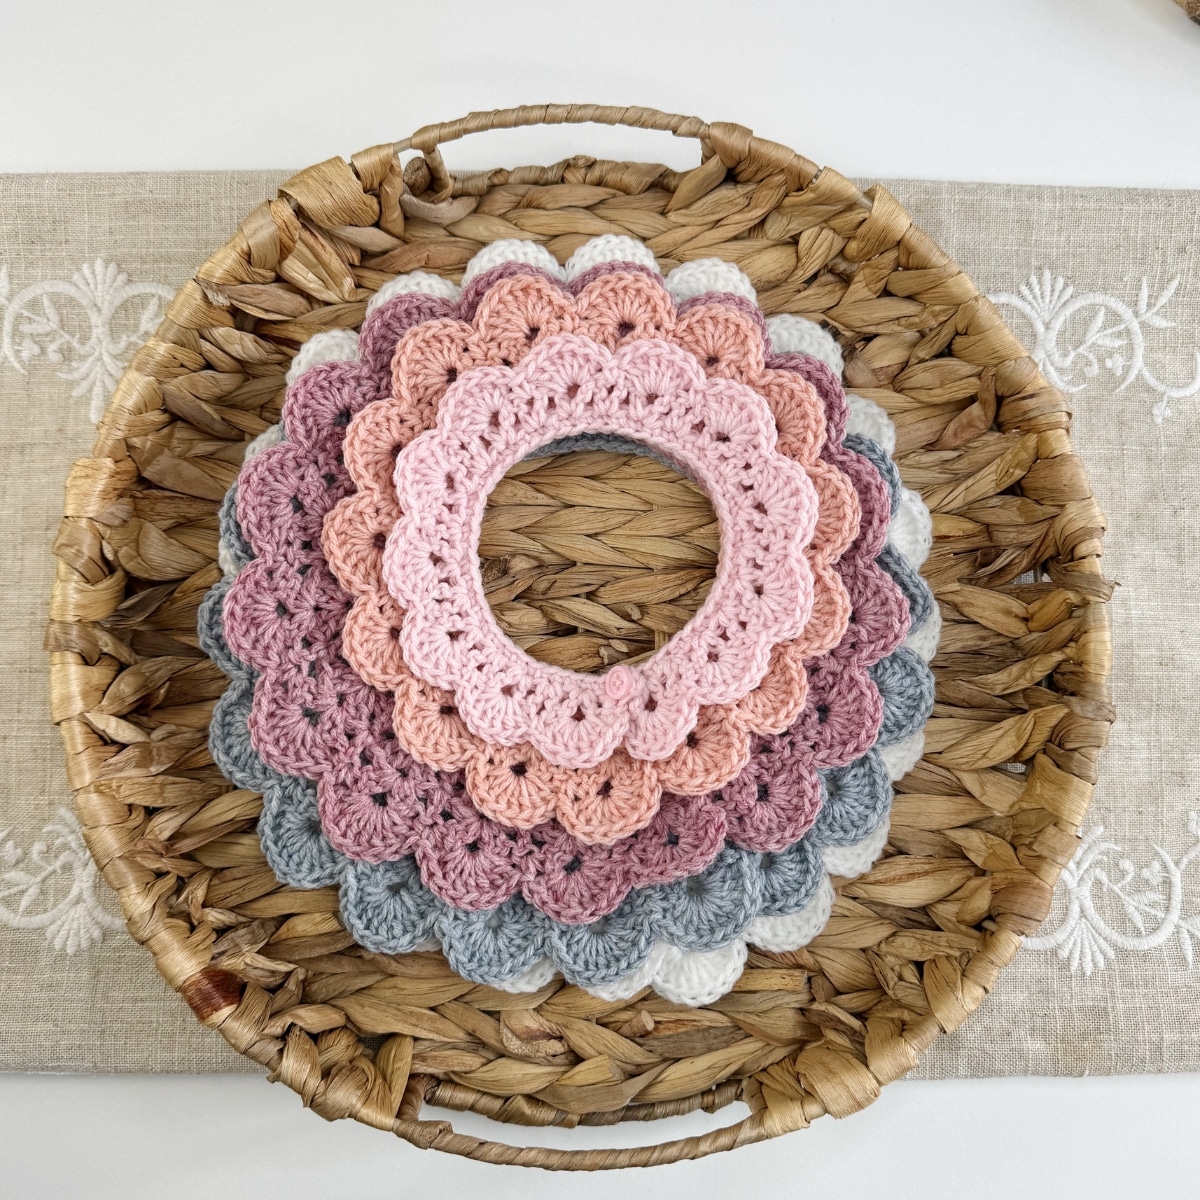 50+ Free Crochet Scarf Patterns - Scarves & Cowls - Easy Crochet Patterns